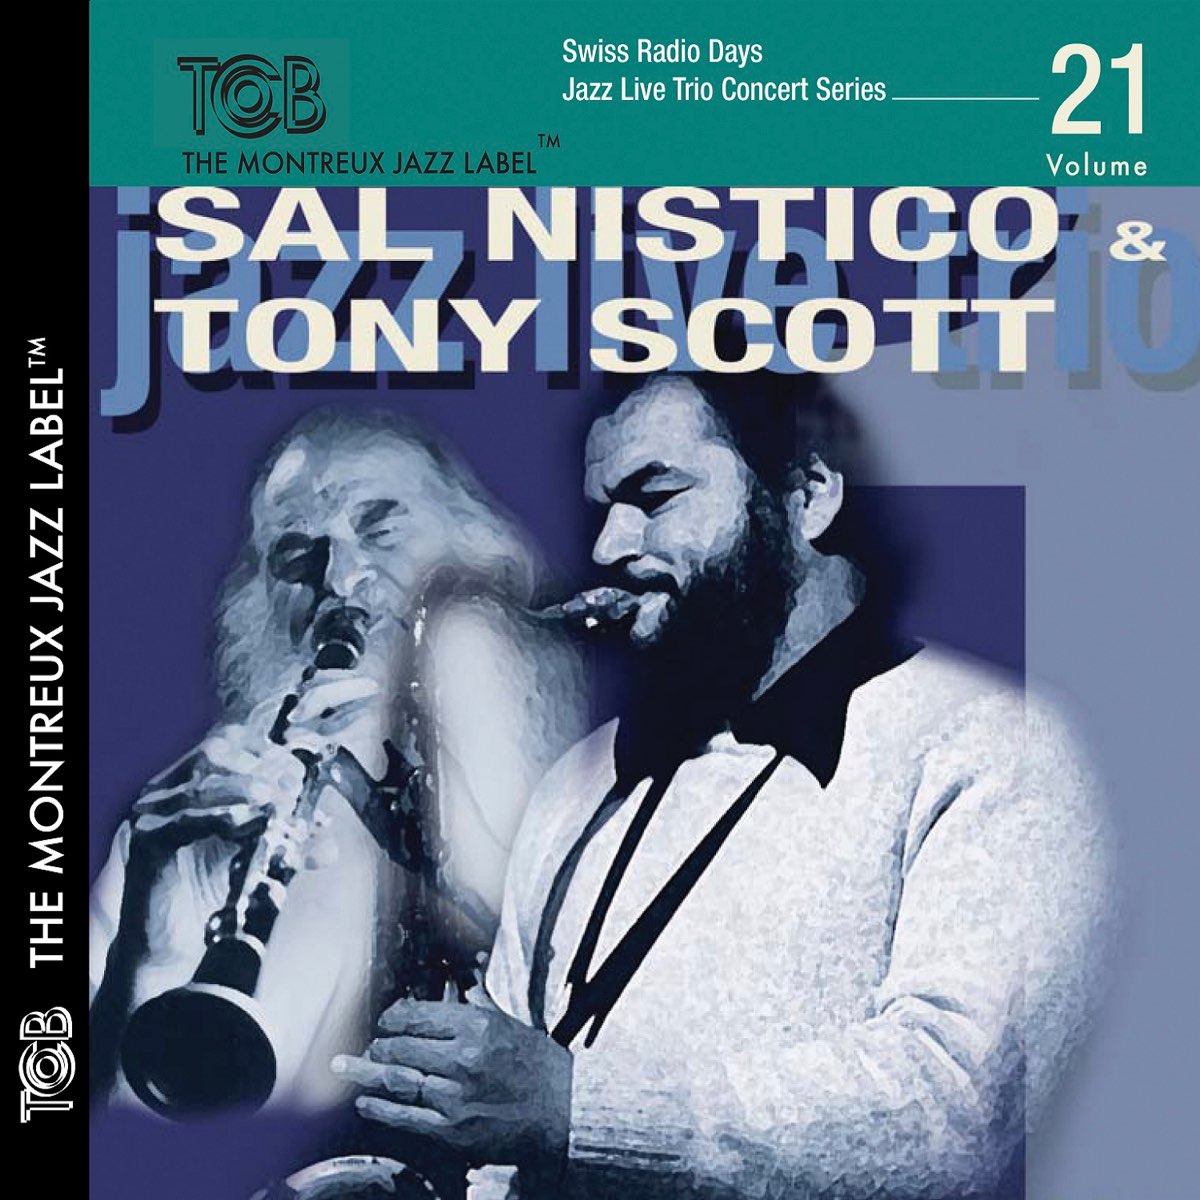 Swiss Radio Days Jazz Live Concert Series Volume 21 – Album par Sal Nistico  & Tony Scott – Apple Music